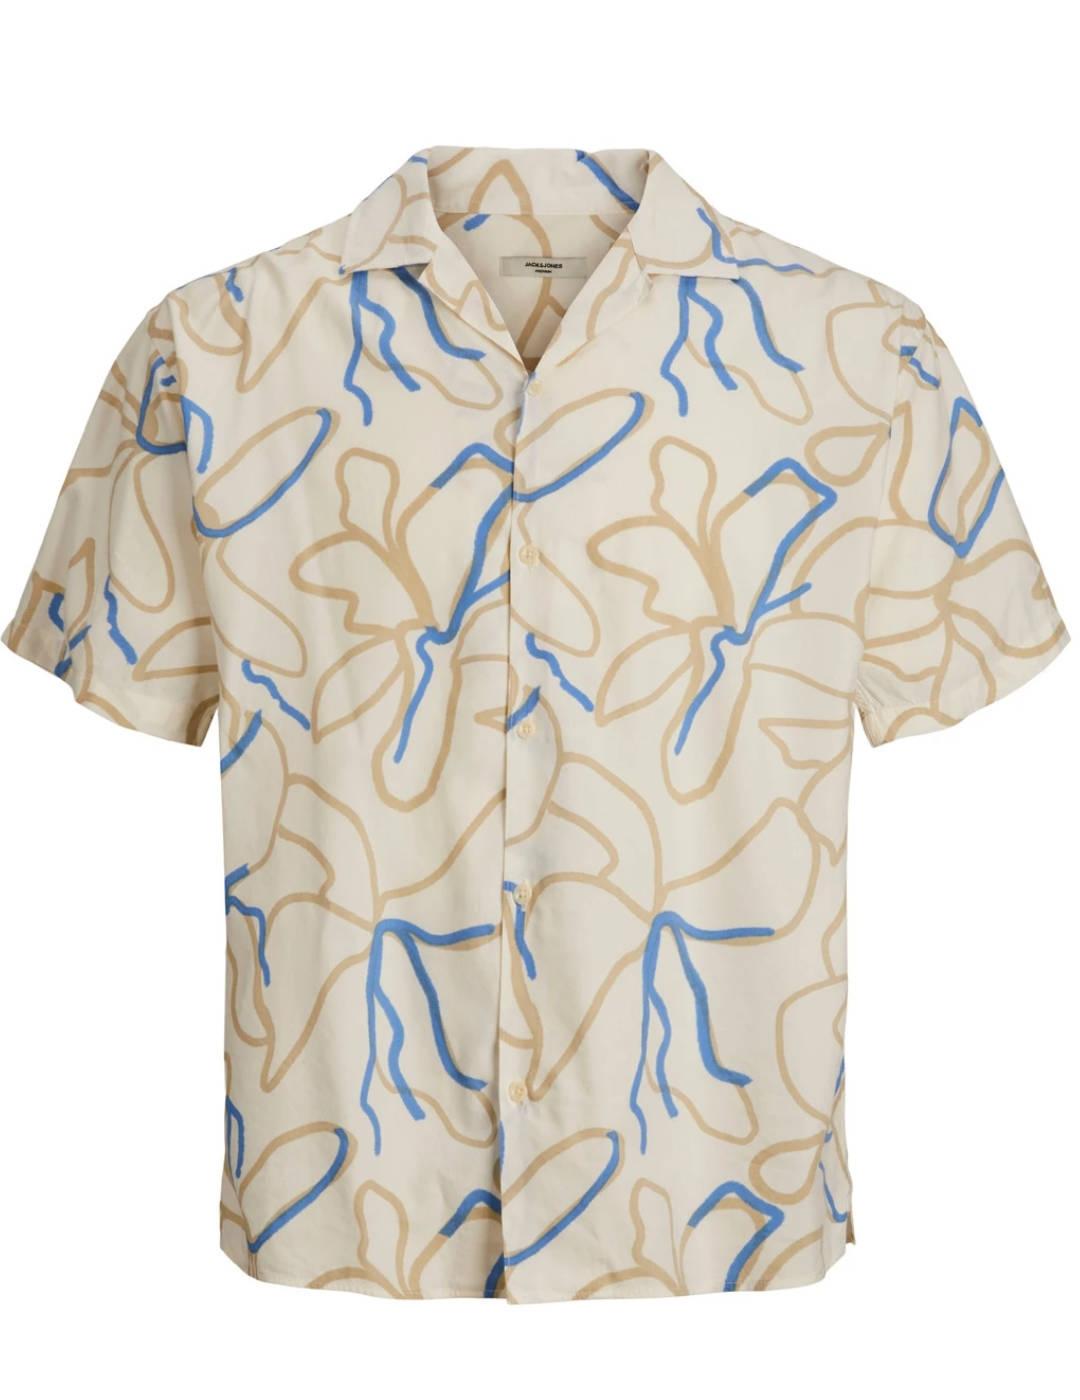 Camisa Jack&Jones Tropic crudo rayas de hombre